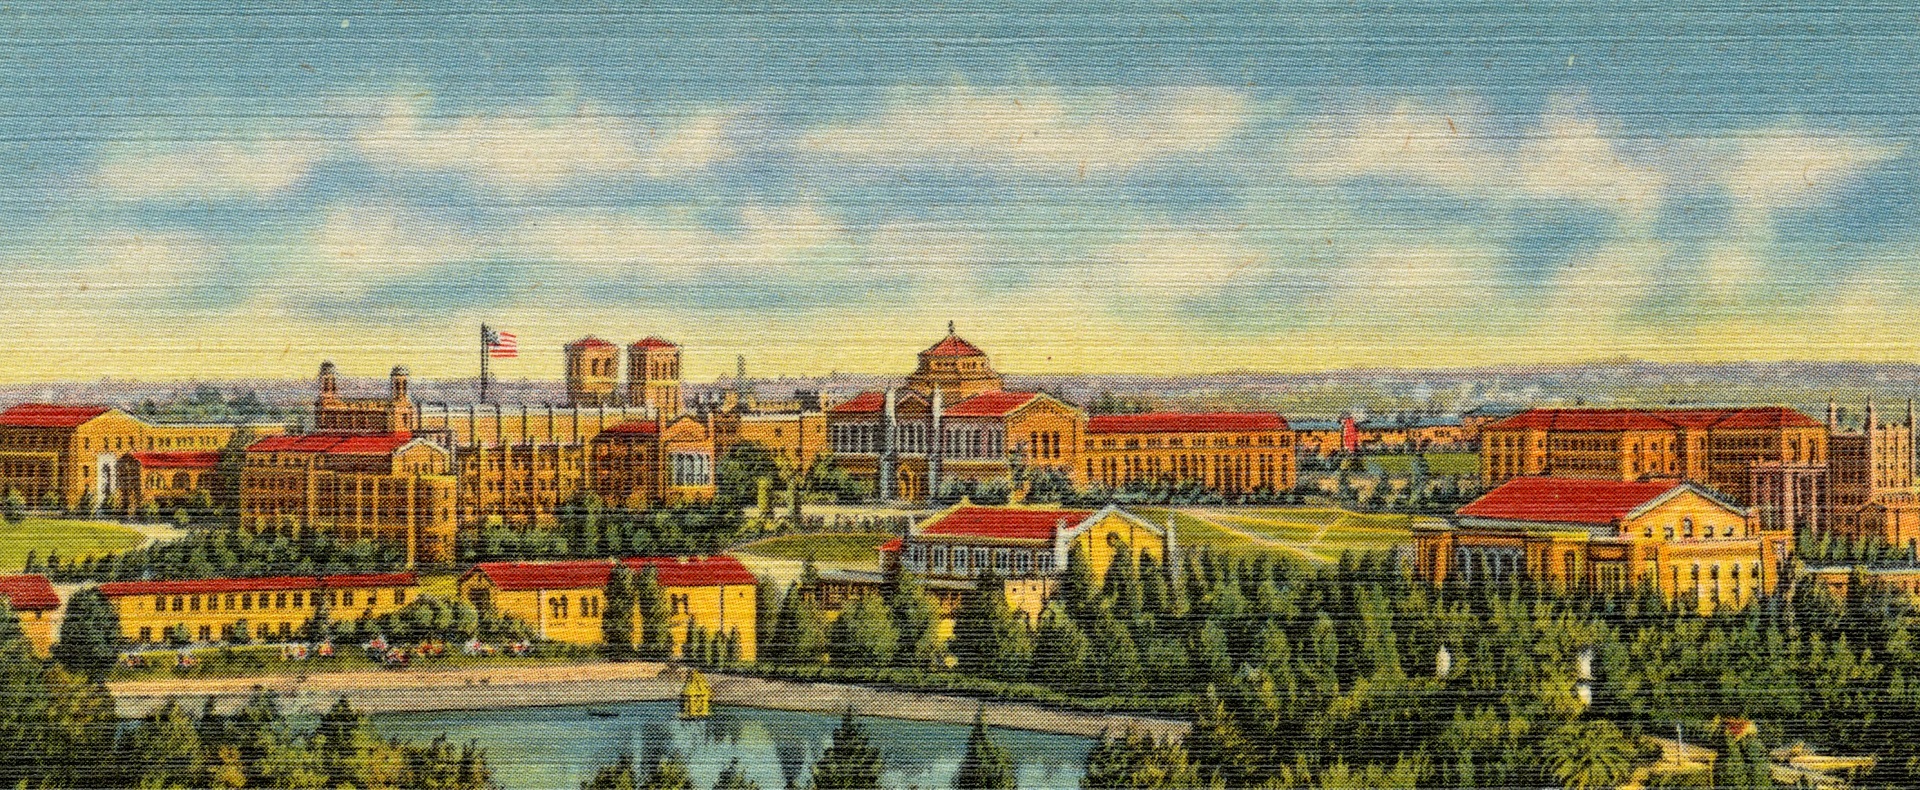 a vintage postcard depicting the university campus